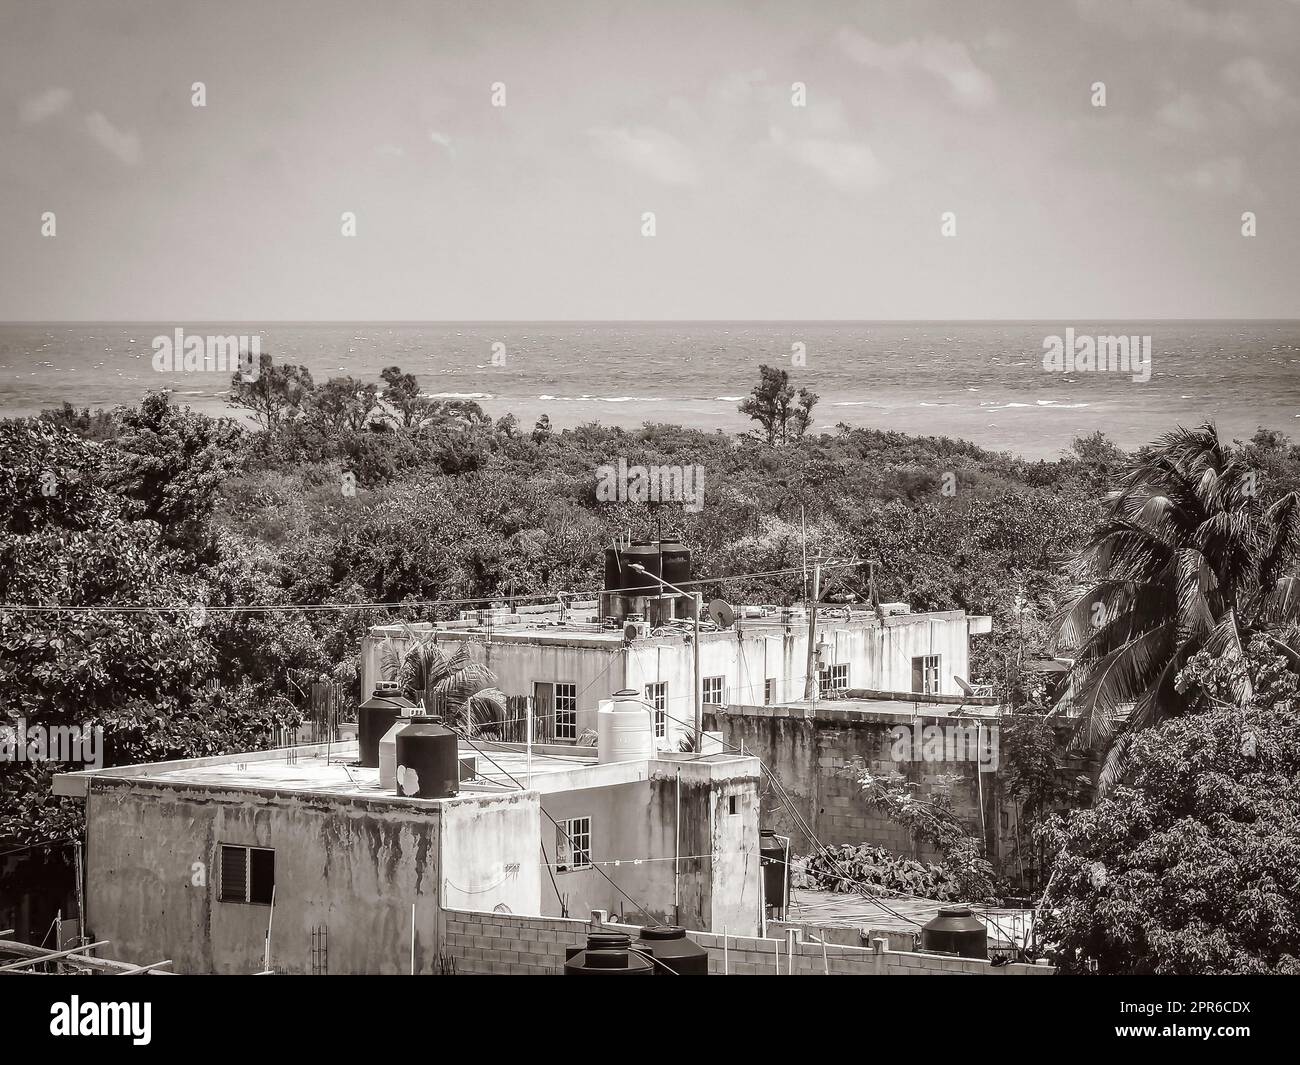 Cityscape caribbean ocean and beach panorama view Playa del Carmen. Stock Photo